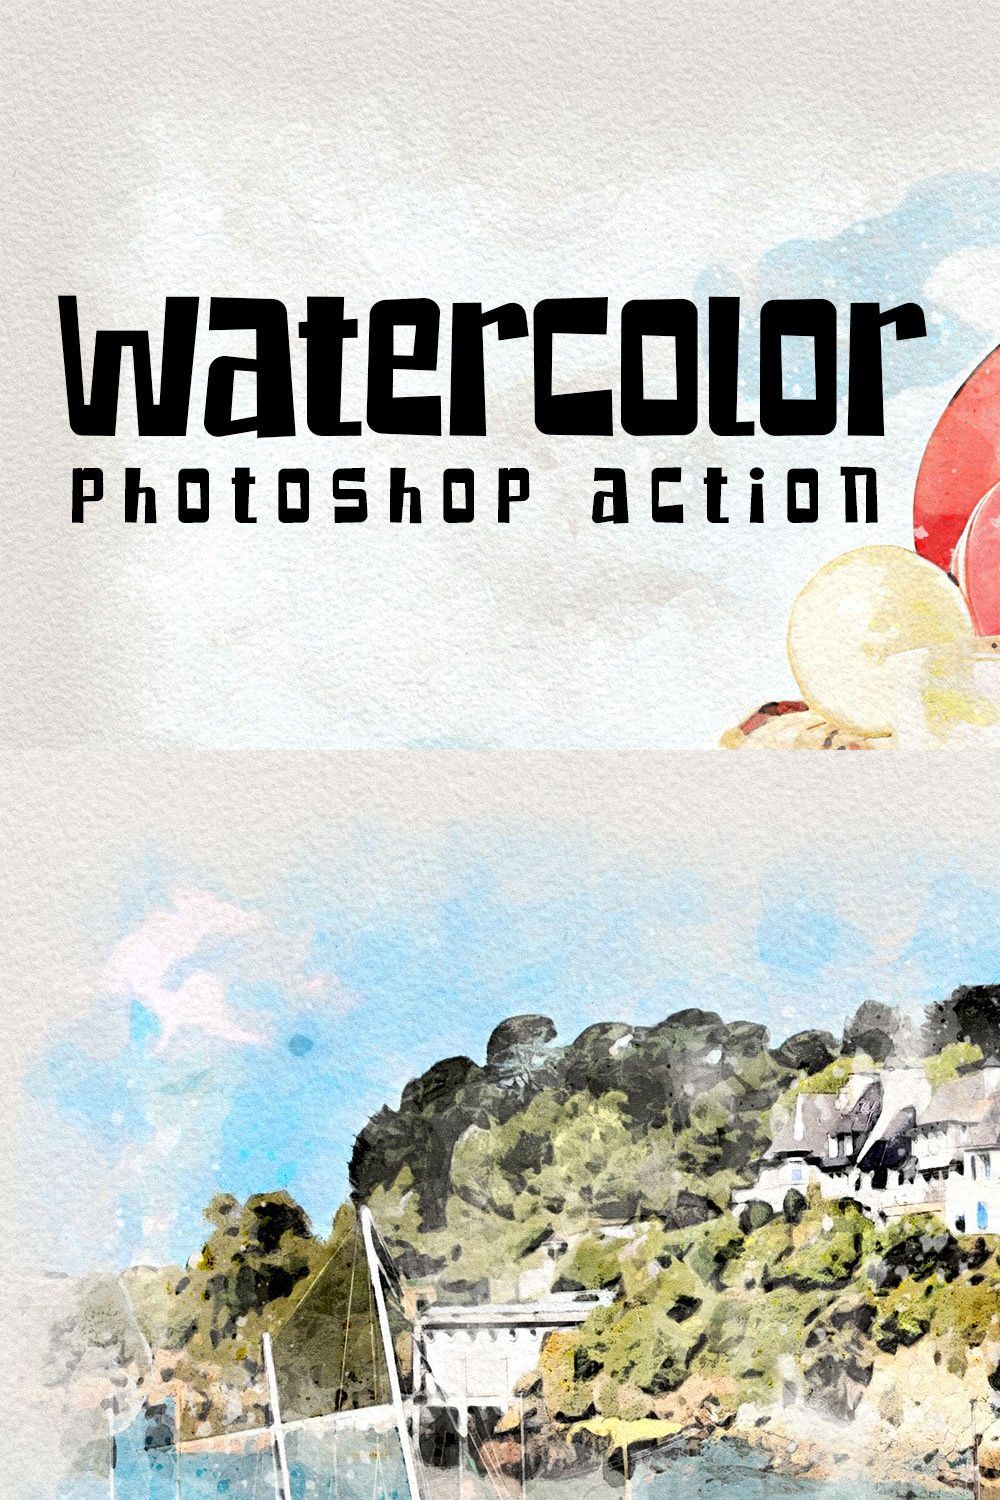 Watercolor - Photoshop Action pinterest preview image.